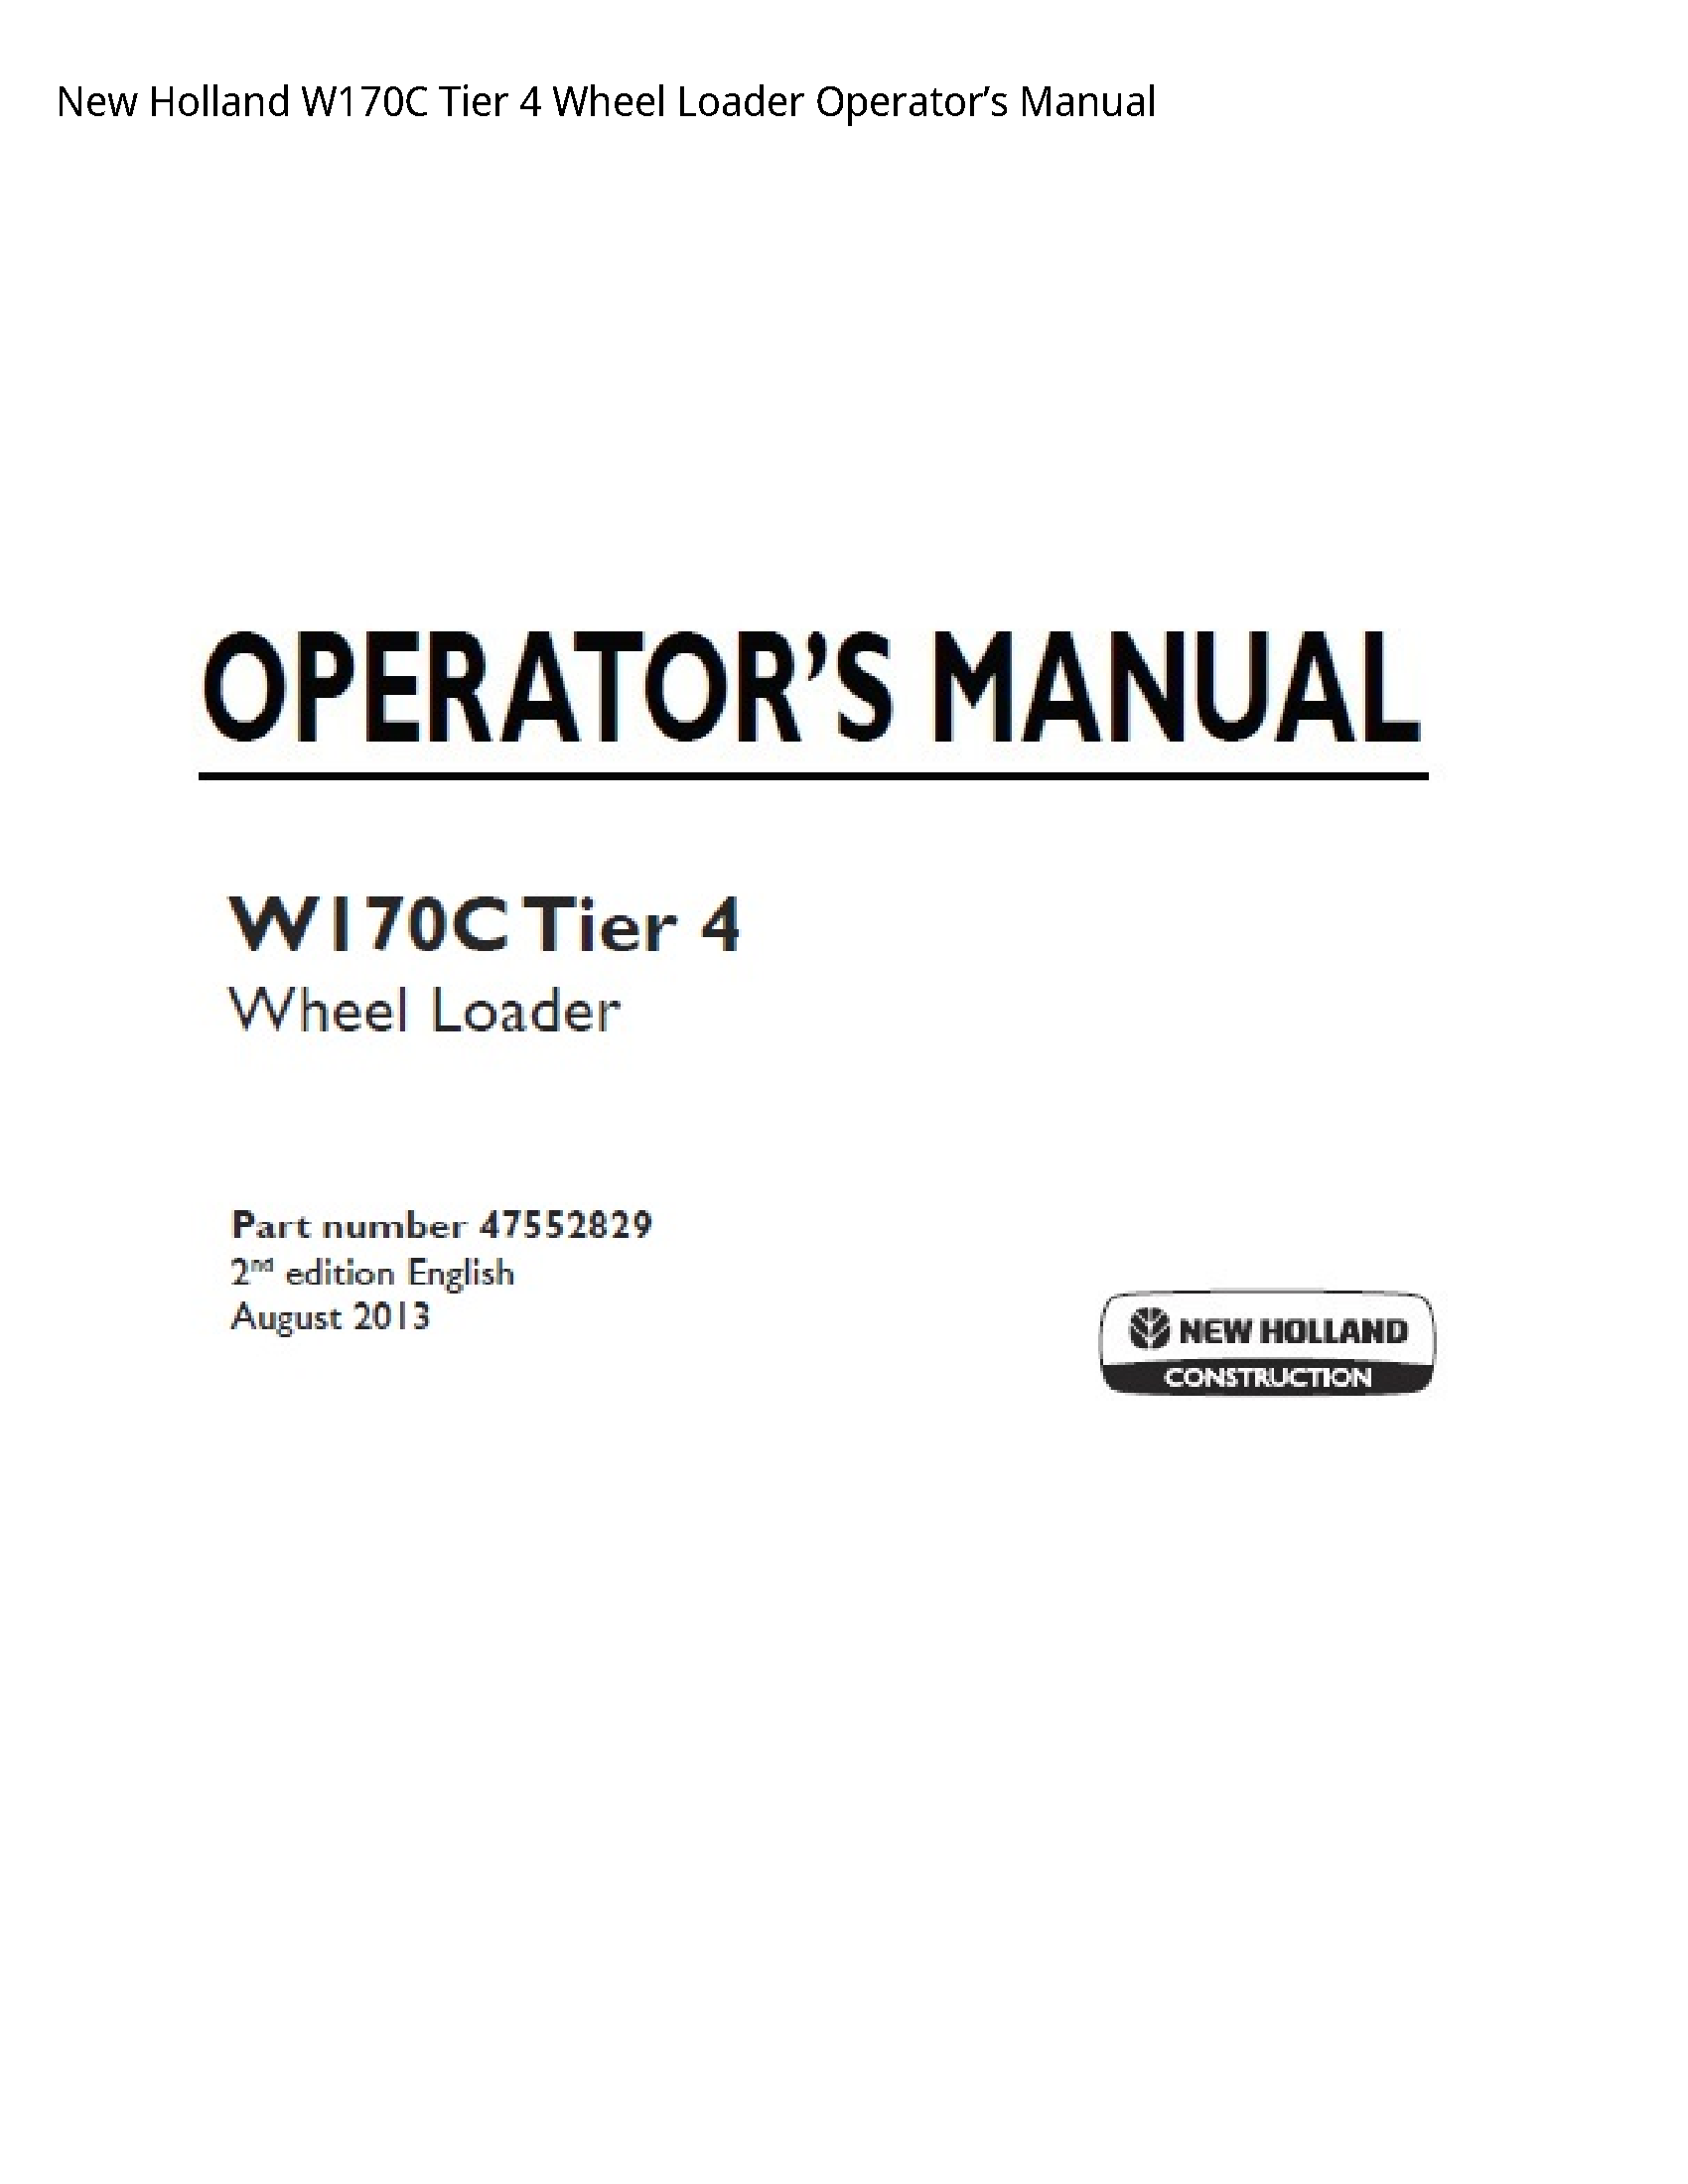 New Holland W170C Tier Wheel Loader Operator’s manual